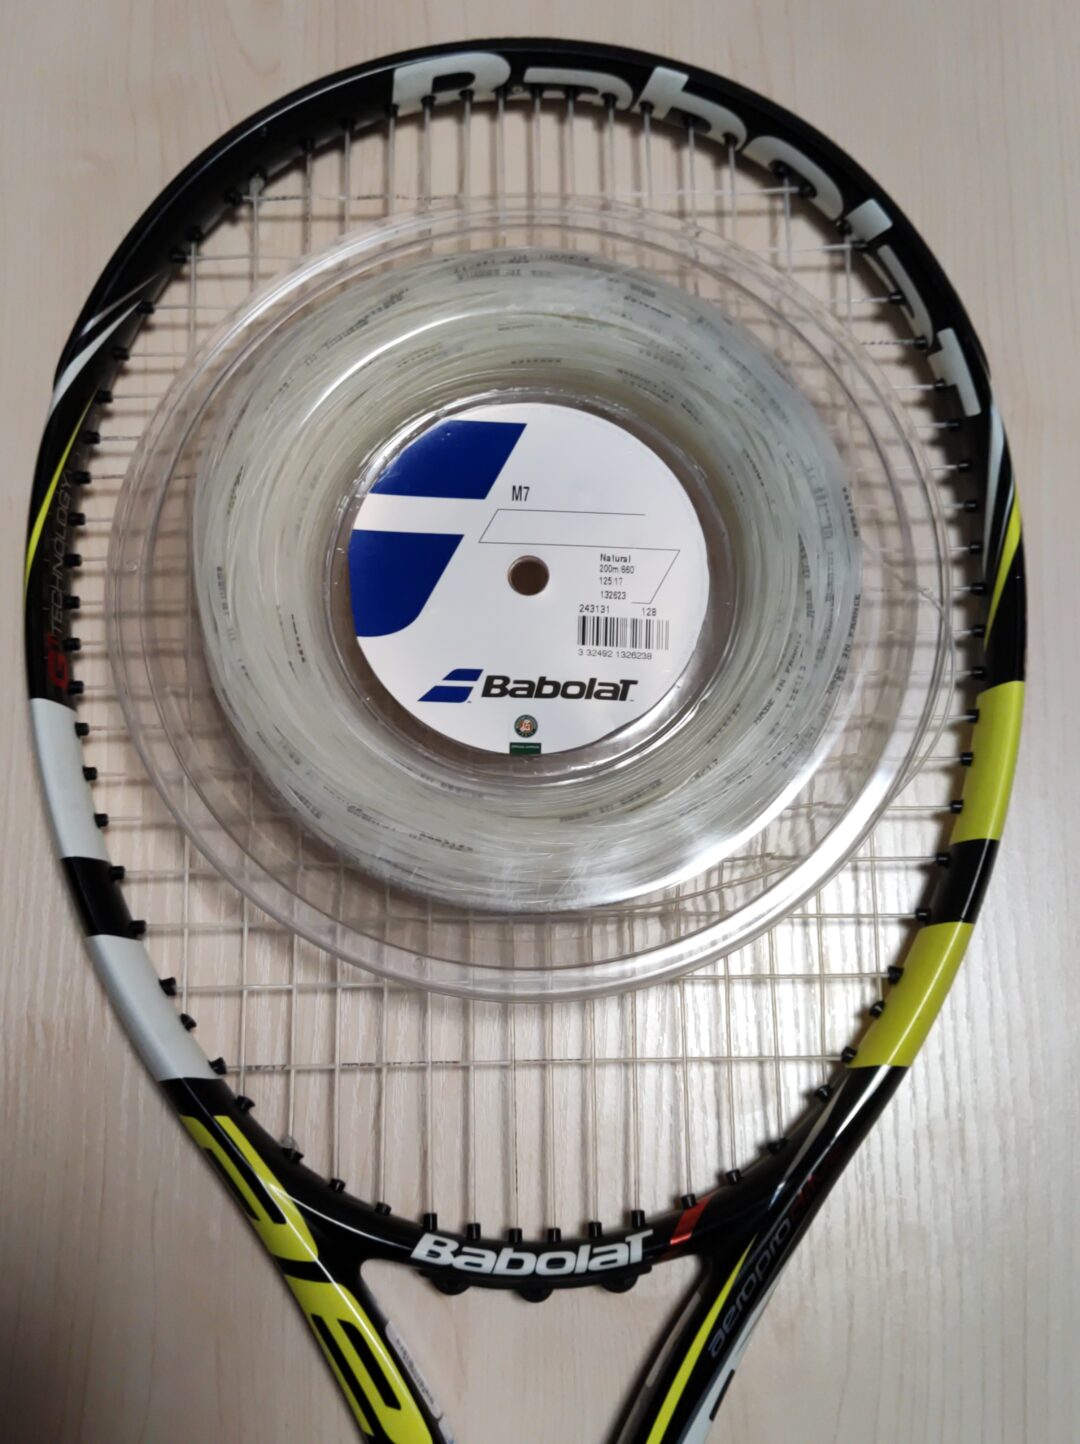 Corde Tennis BABOLAT M7 1.30 n.2 matassine 12m multifilamento 